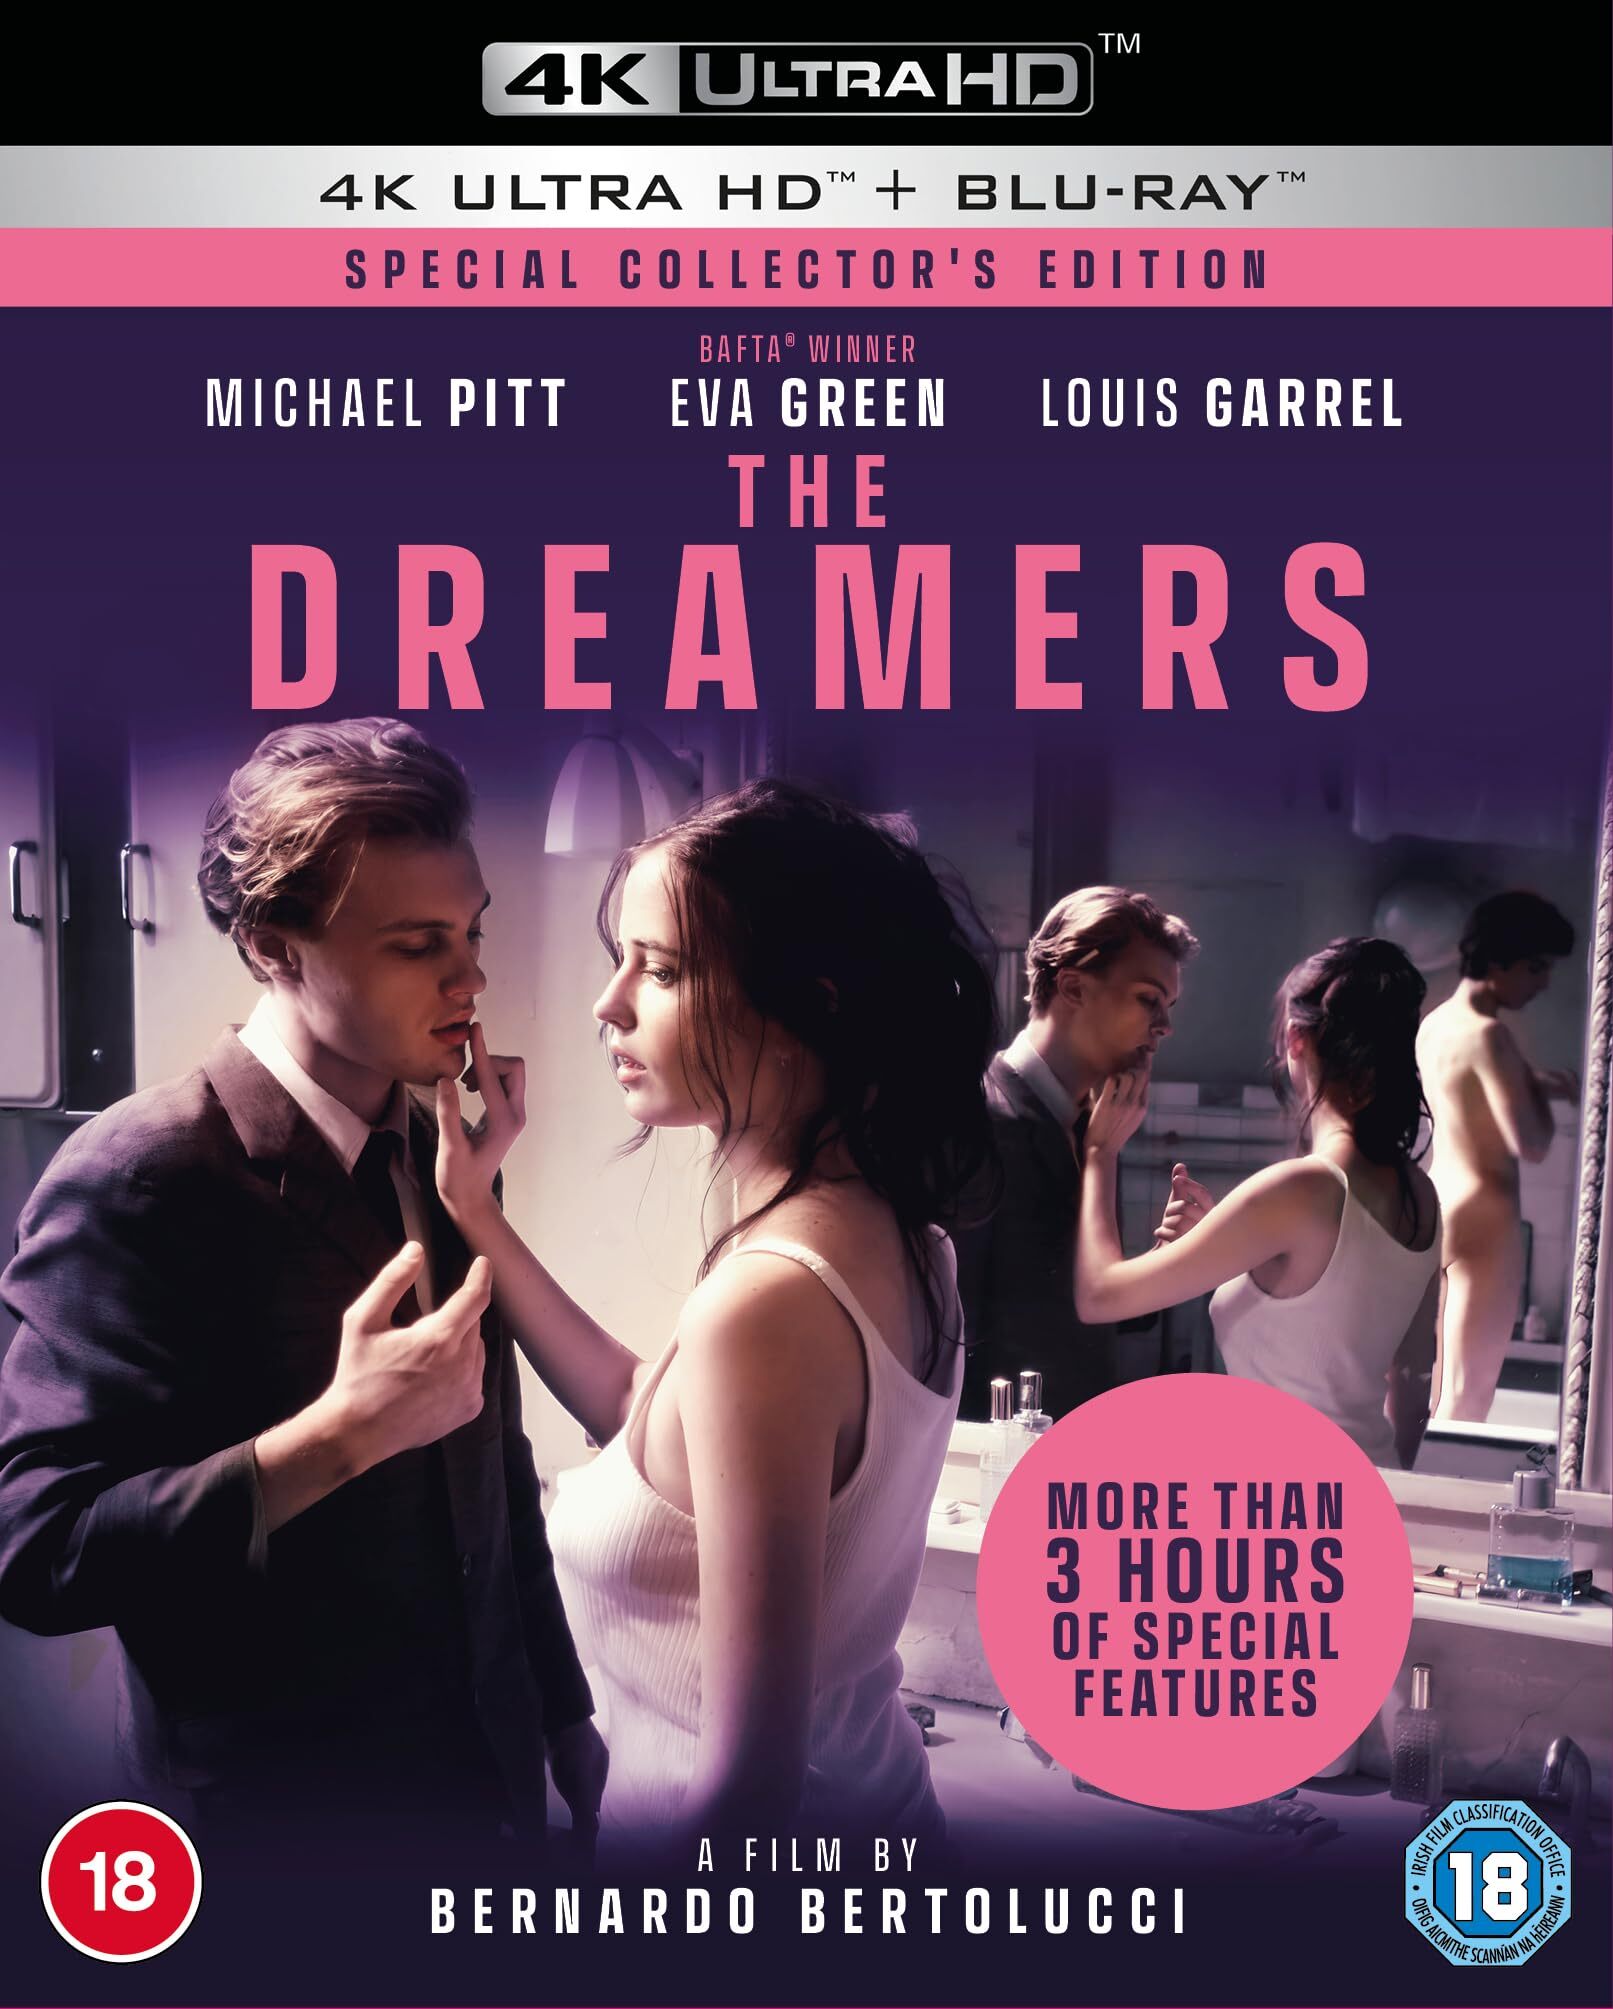 THE DREAMERS, Michael Pitt, Eva Green, Louis Garrel, 2003, (c) Fox